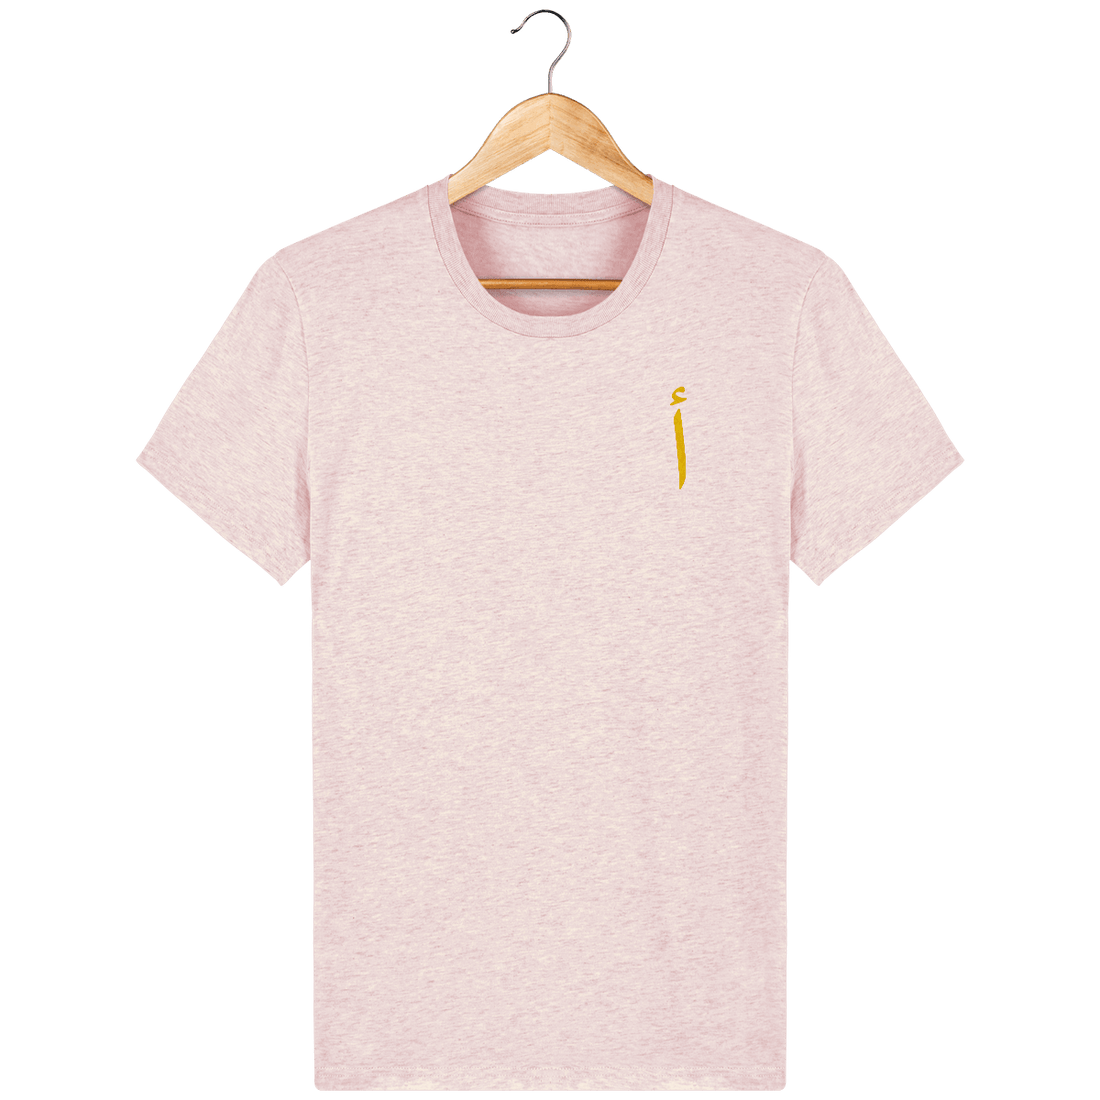 Unisexe>Tee-shirts - T-Shirt Homme <br> Lettre Arabe Alif